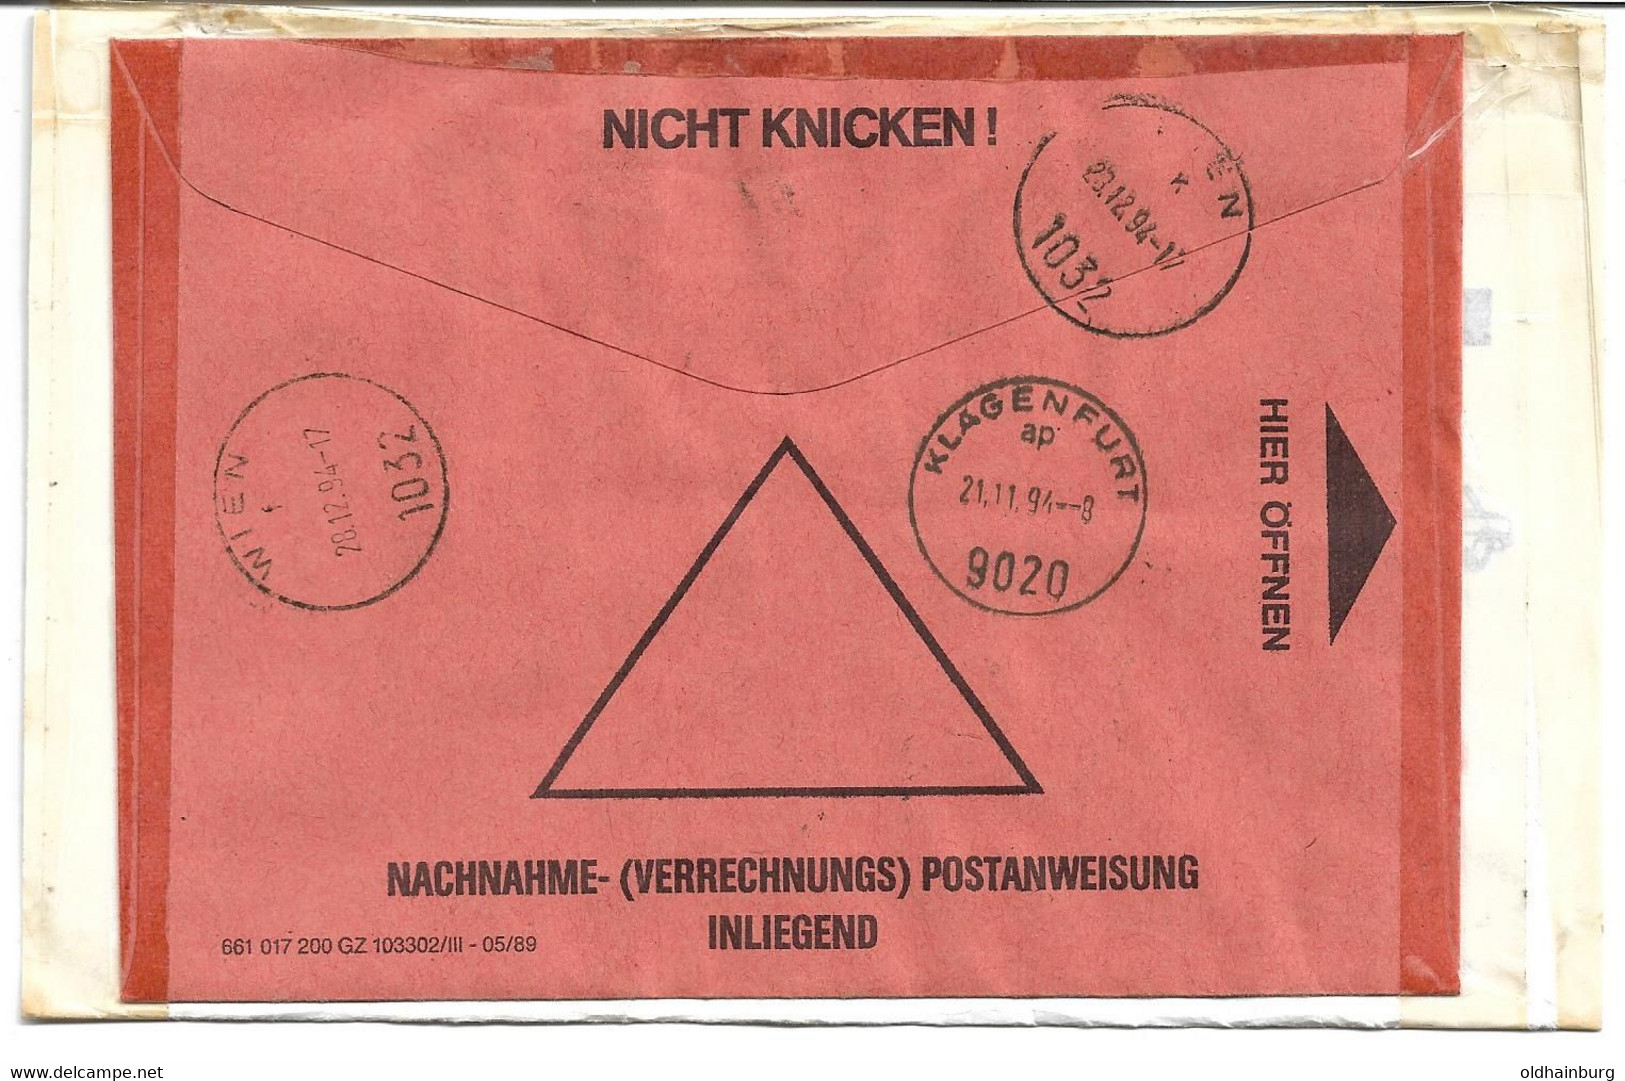 1580e: Heimatbeleg 4841 Ungenach 18.11.94, Automatenmarken- Frankatur Nachnahme Portogerecht - Vöcklabruck